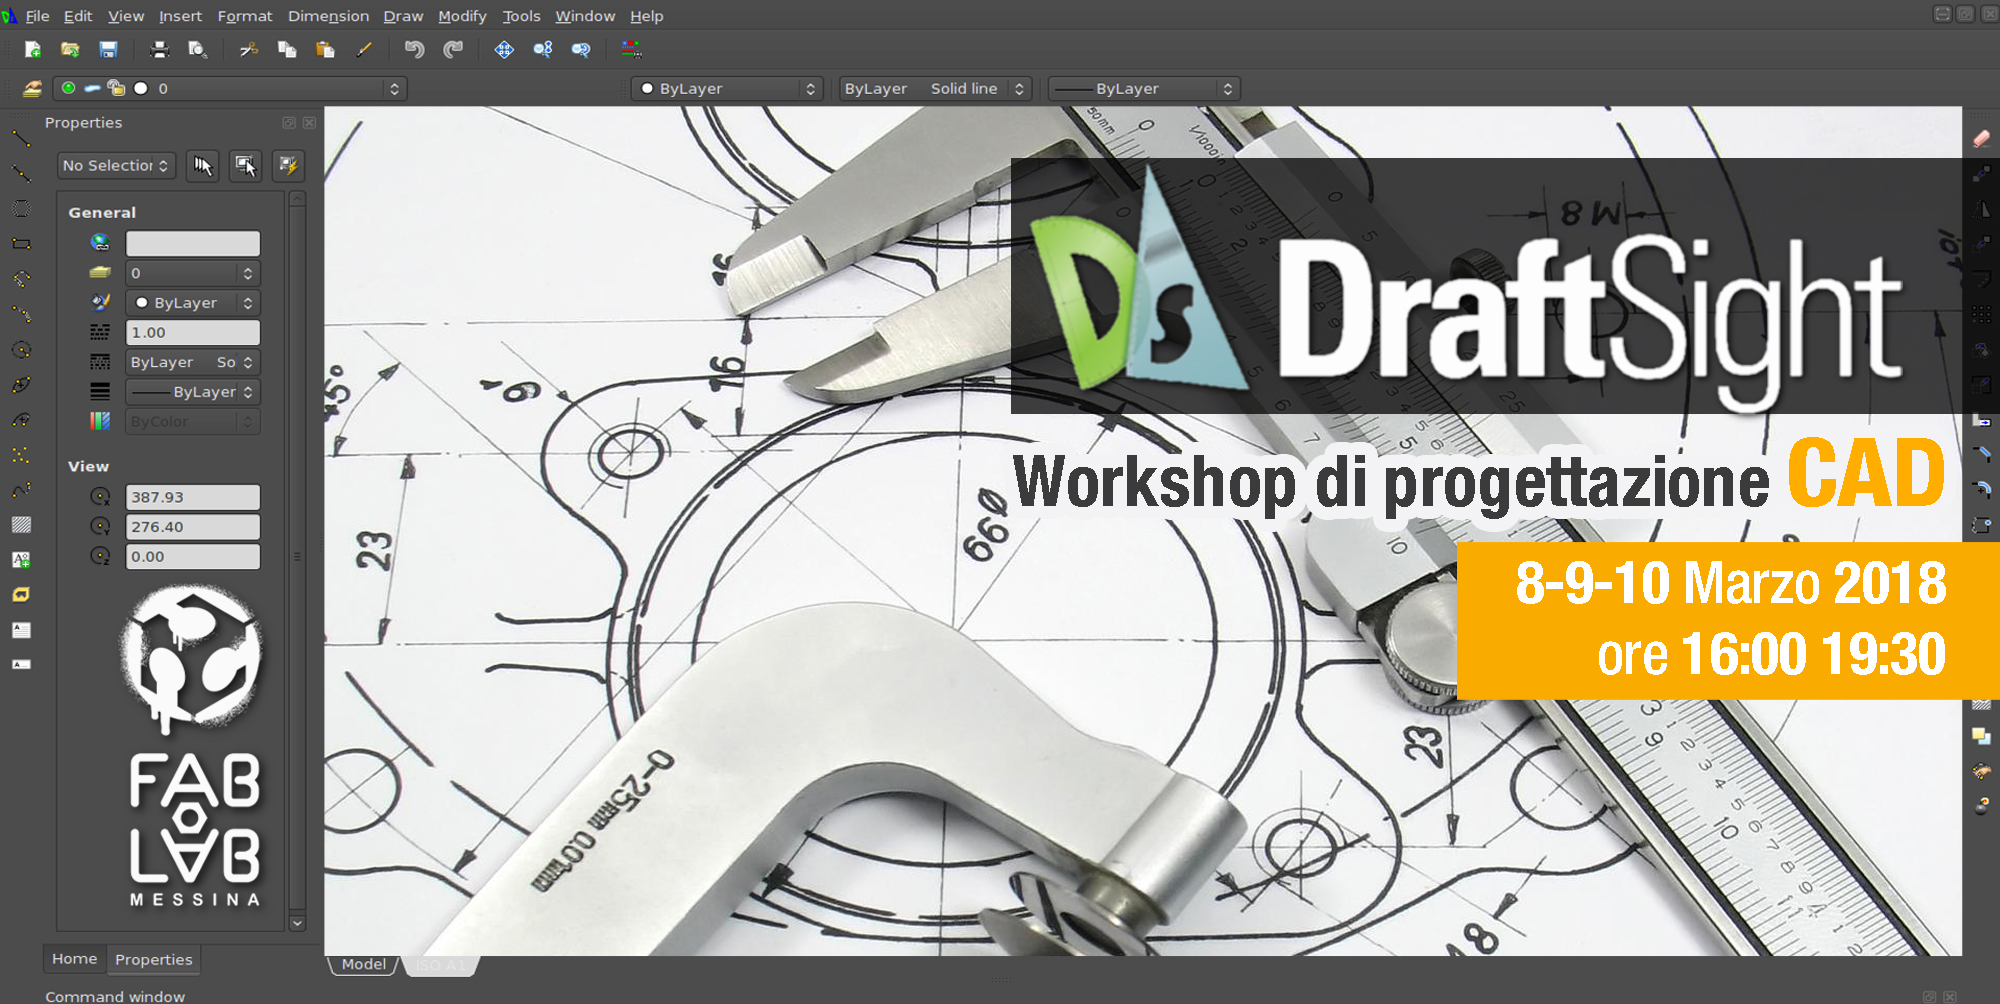 DraftSight – Workshop di progettazione CAD